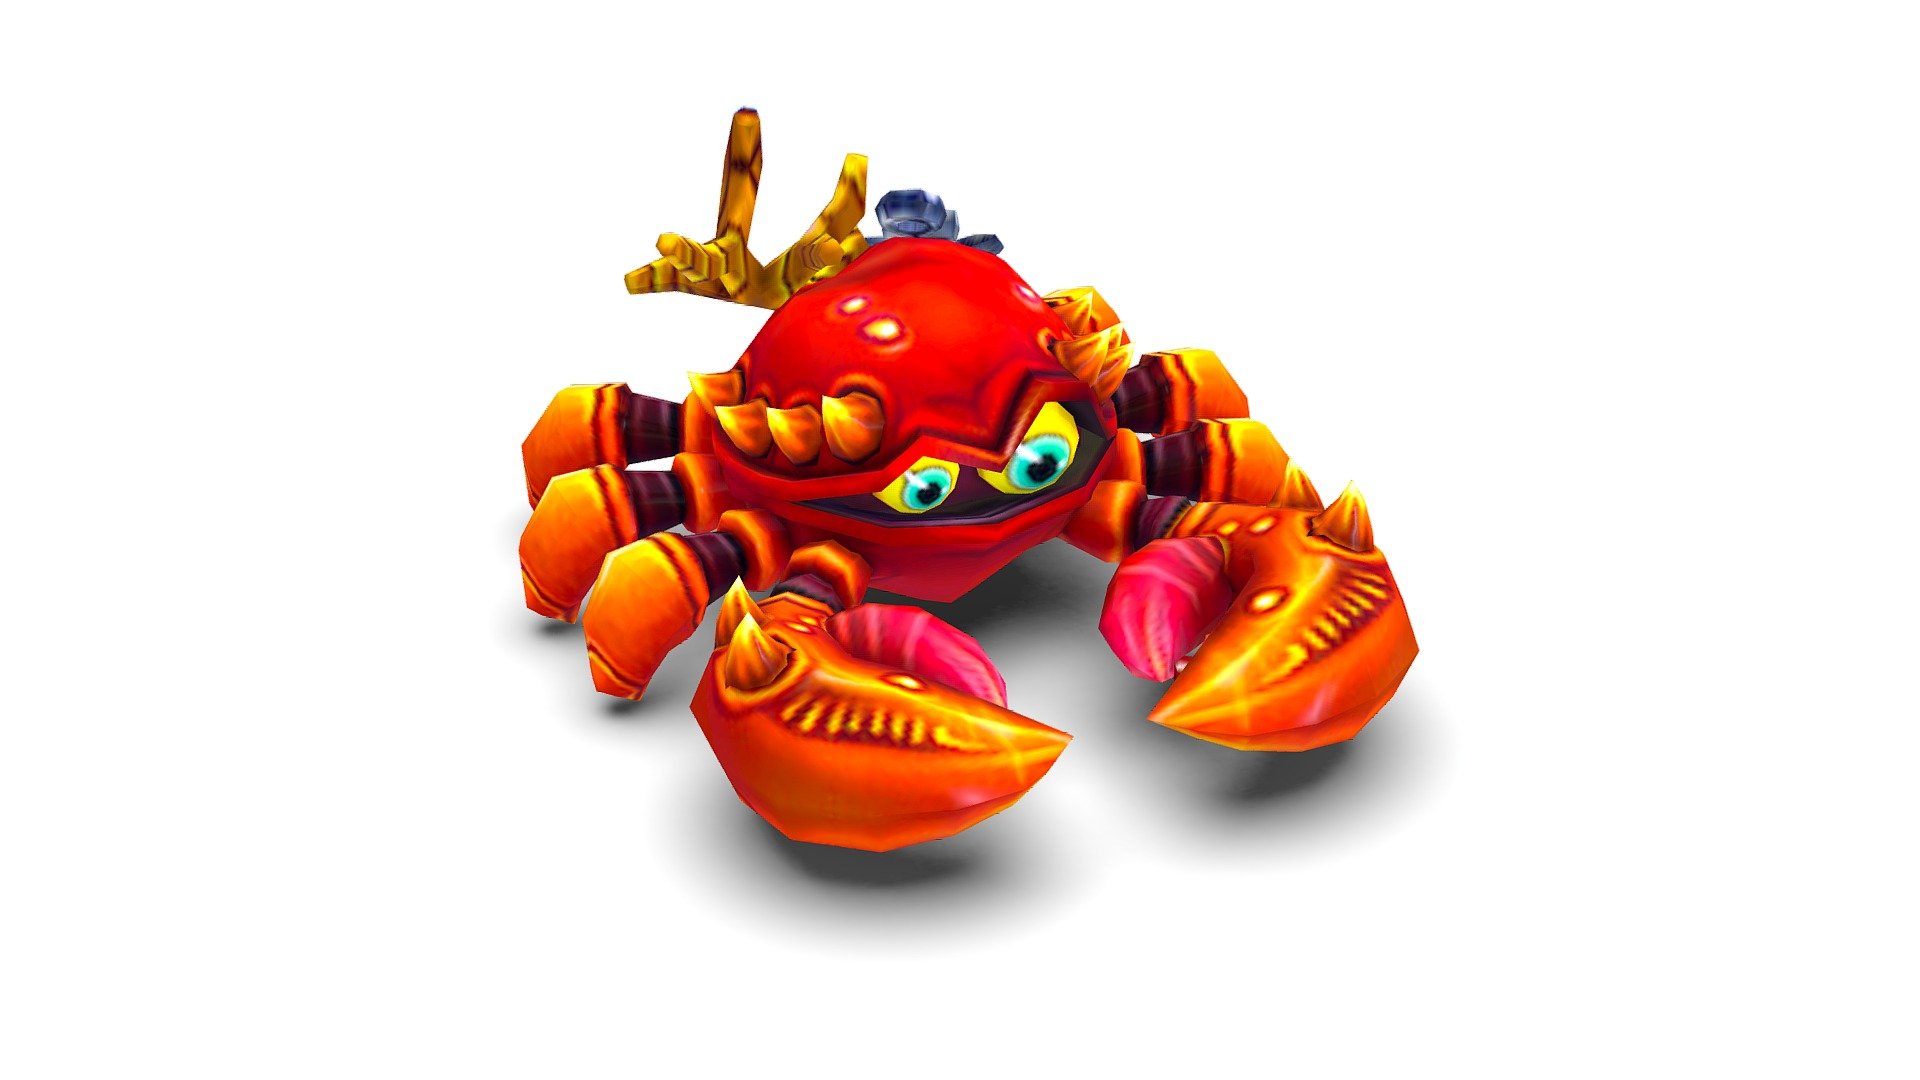 lowpoly 3d model cartoon crab - 3dsMax file included - lowpoly 3d model cartoon crab - Buy Royalty Free 3D model by Oleg Shuldiakov (@olegshuldiakov) 3d model